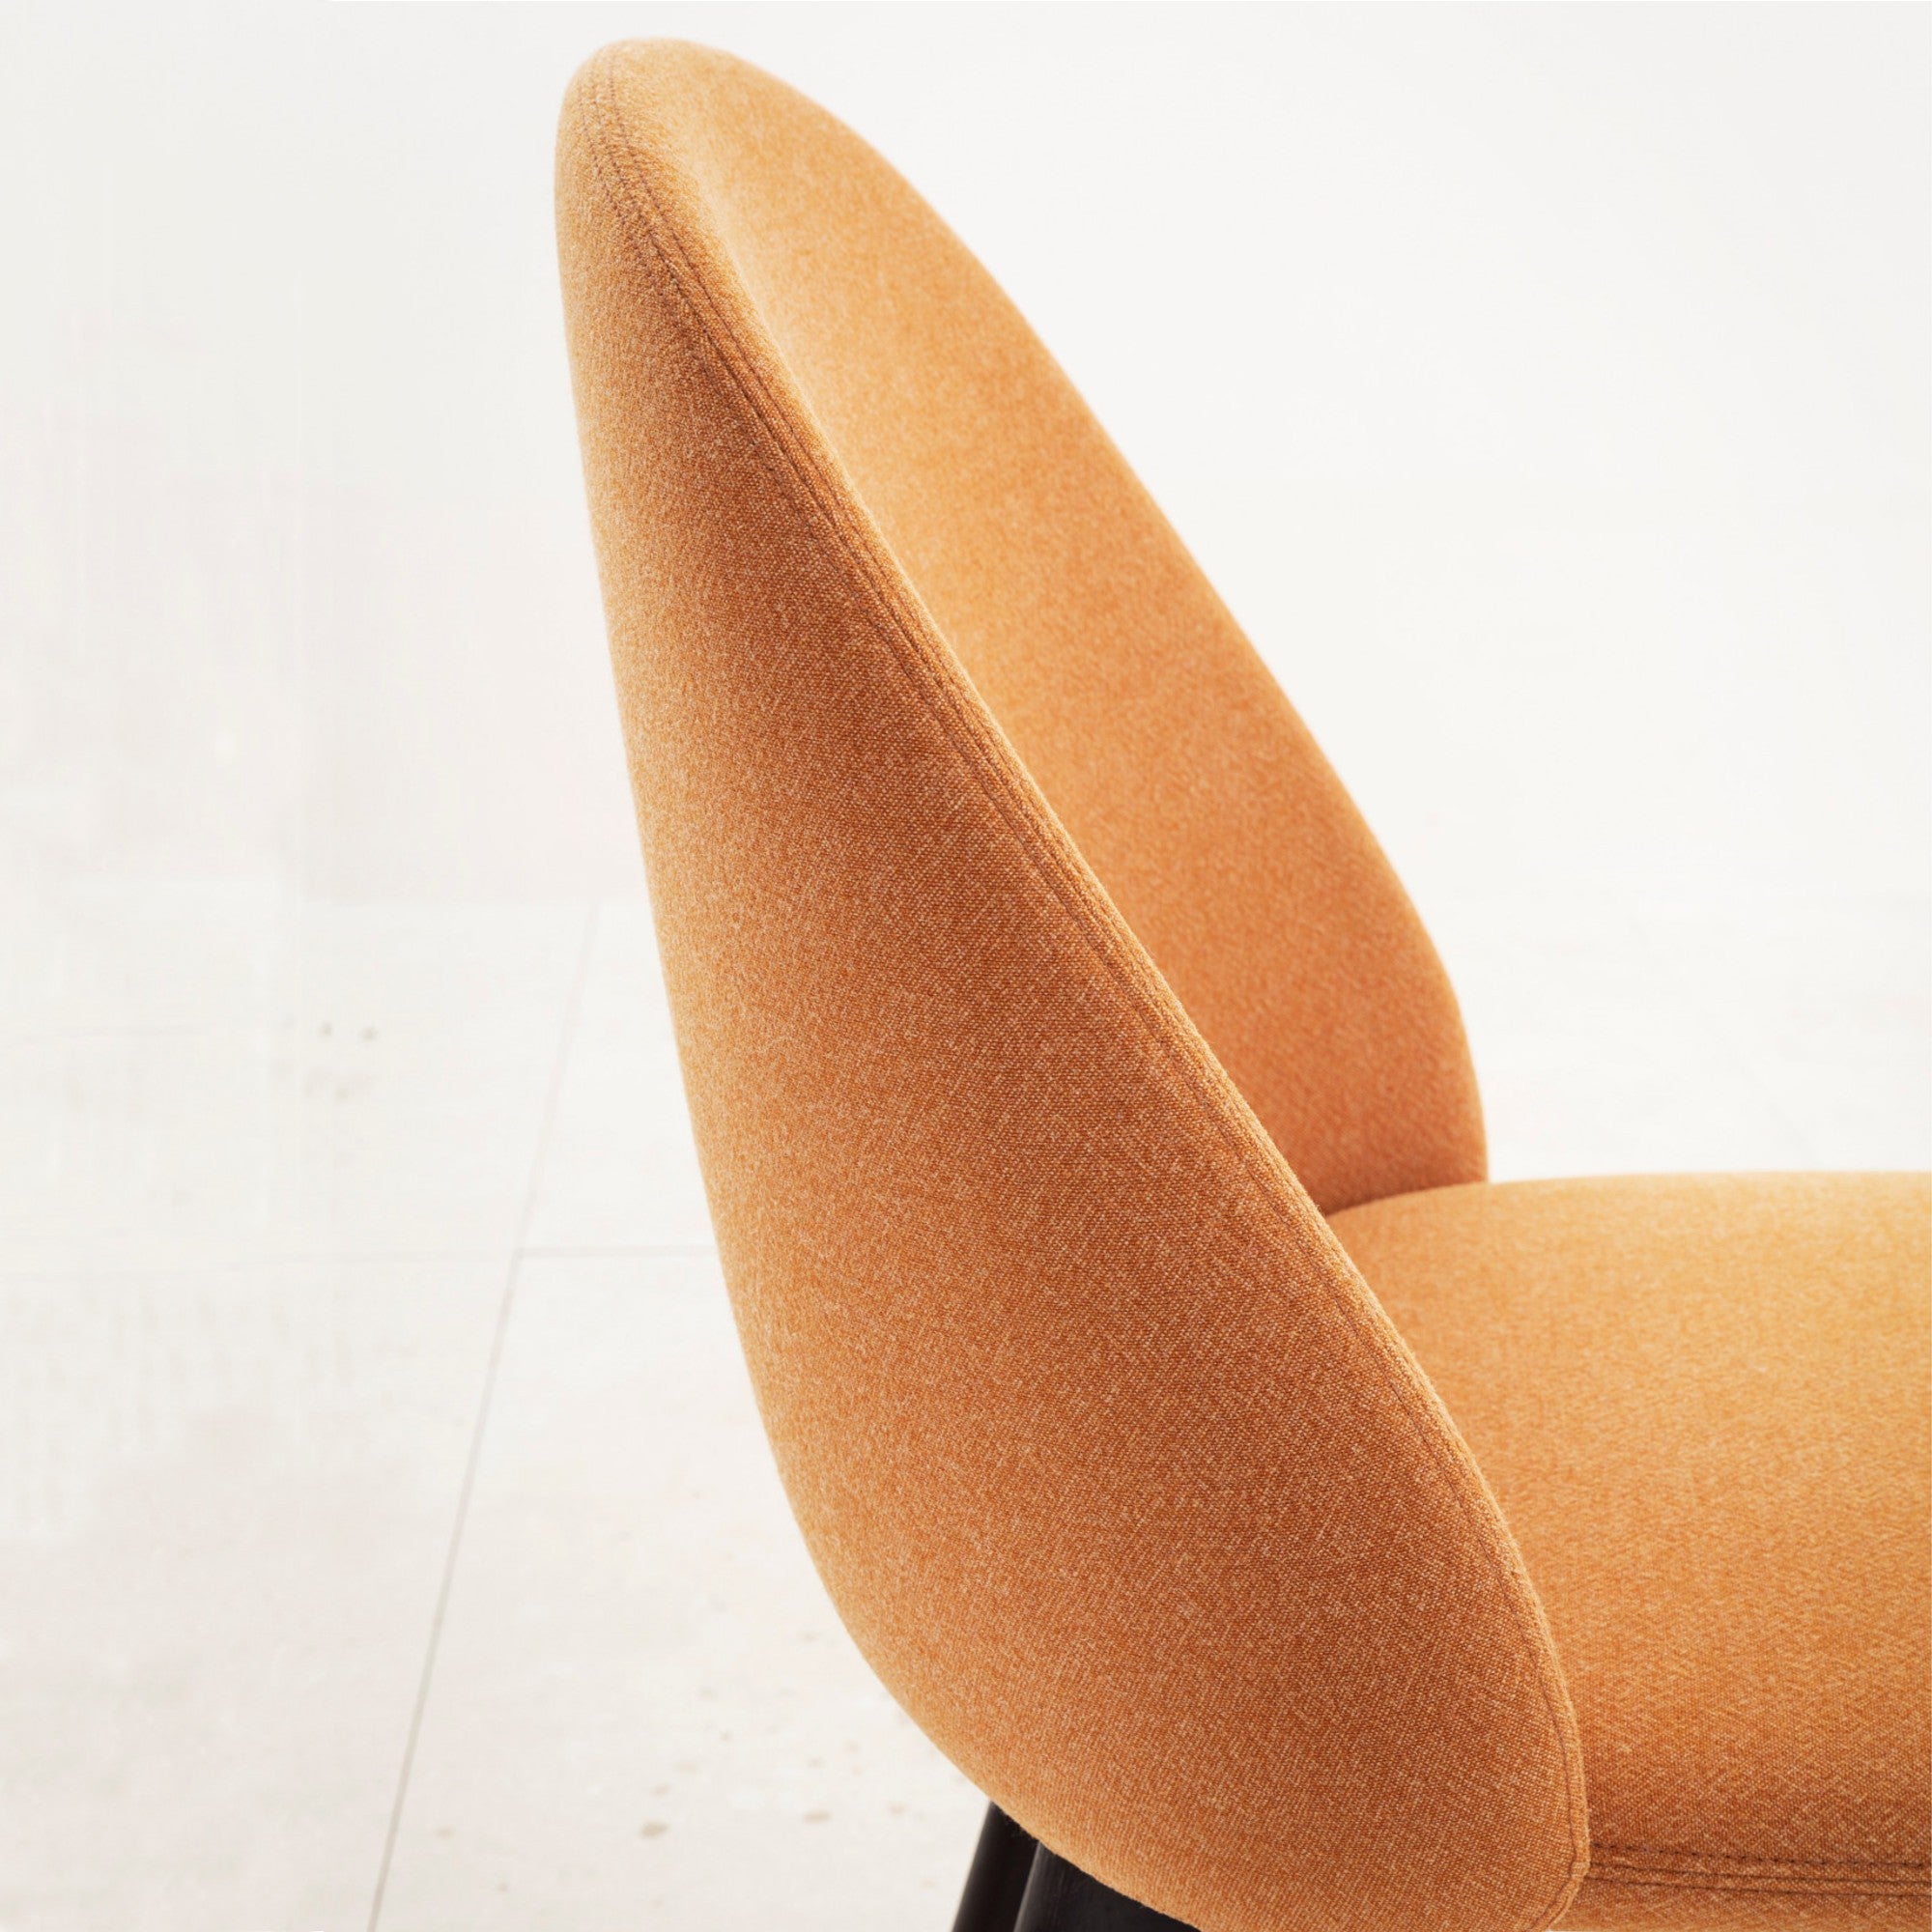 Miniform Iola stool